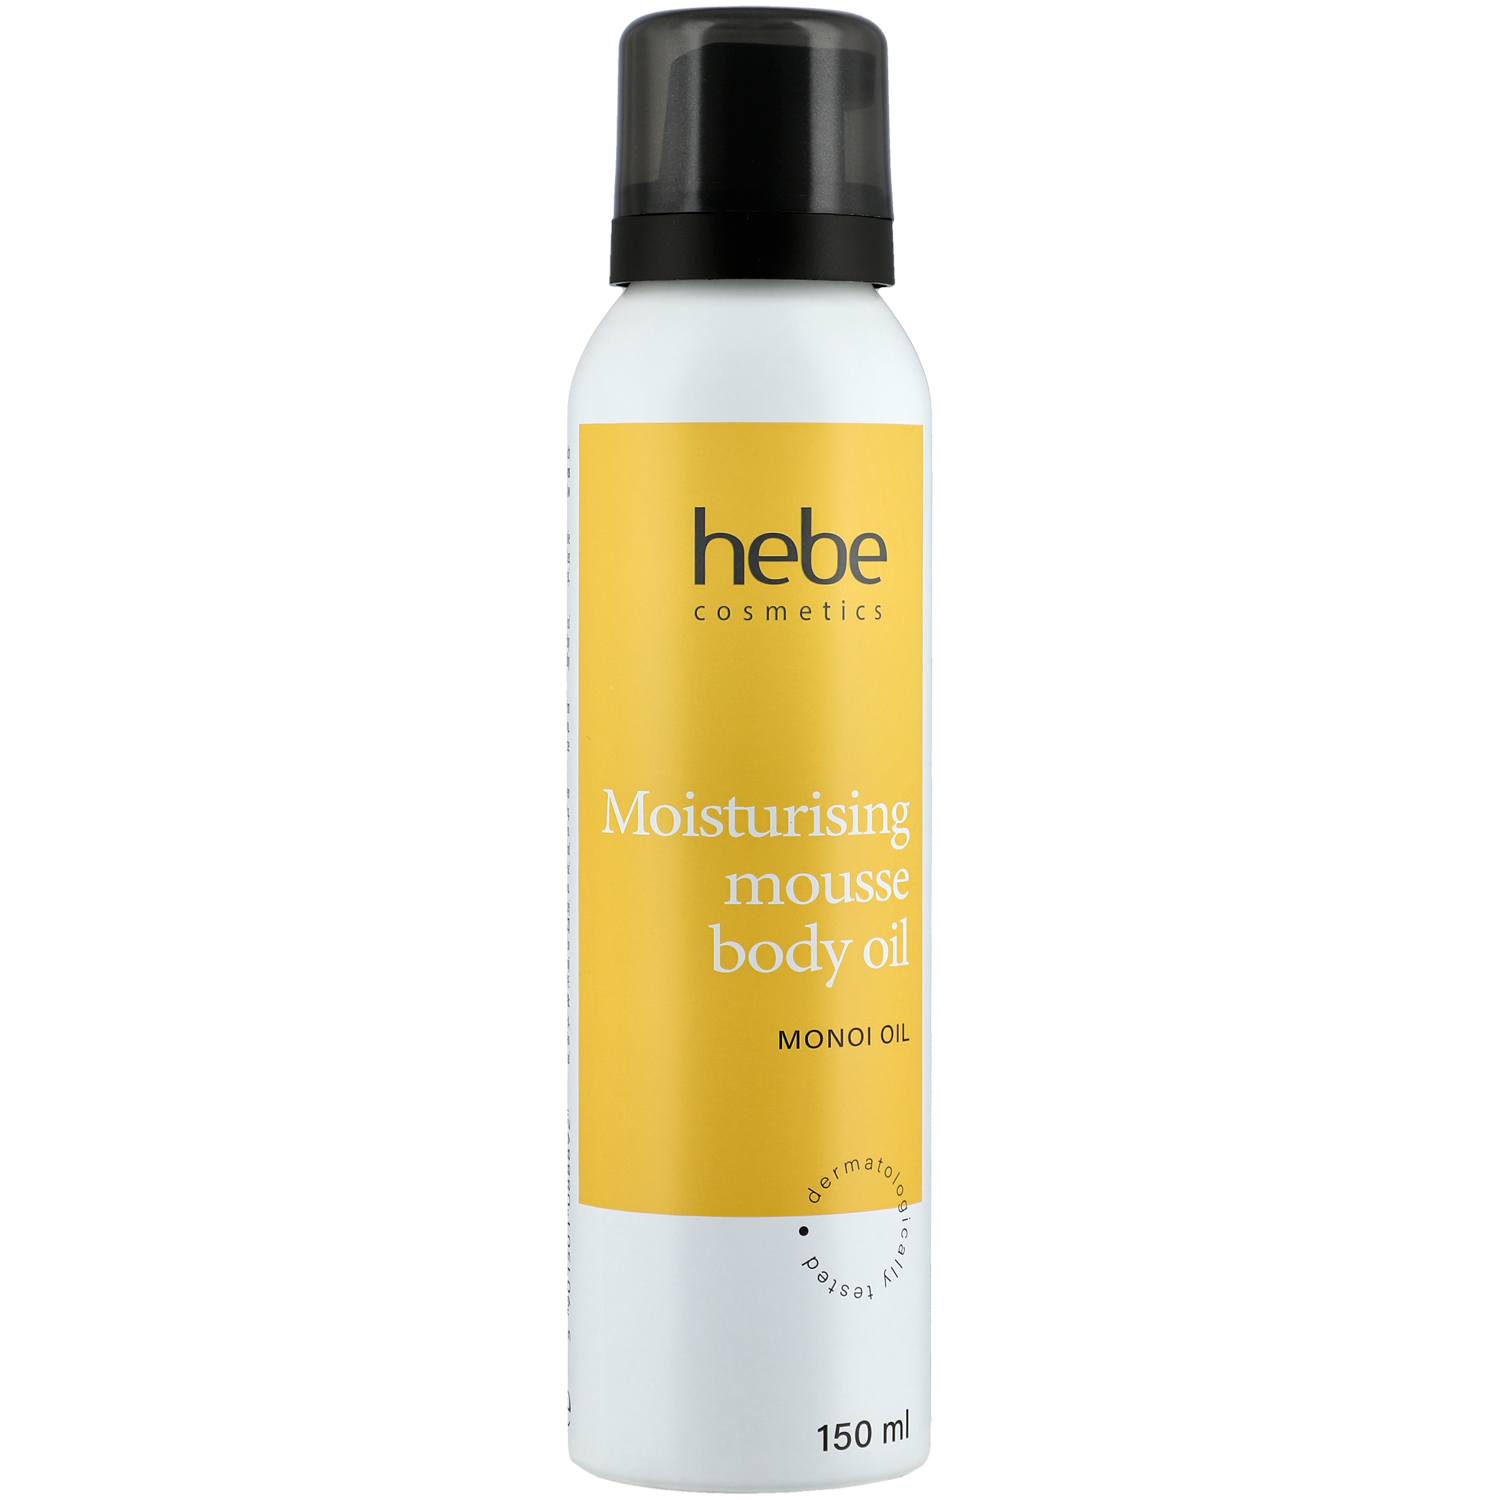 Hebe Cosmetics увлажняющее масло-пена для тела, 150 мл масло для тела увлажняющее karmel кармель 150 мл